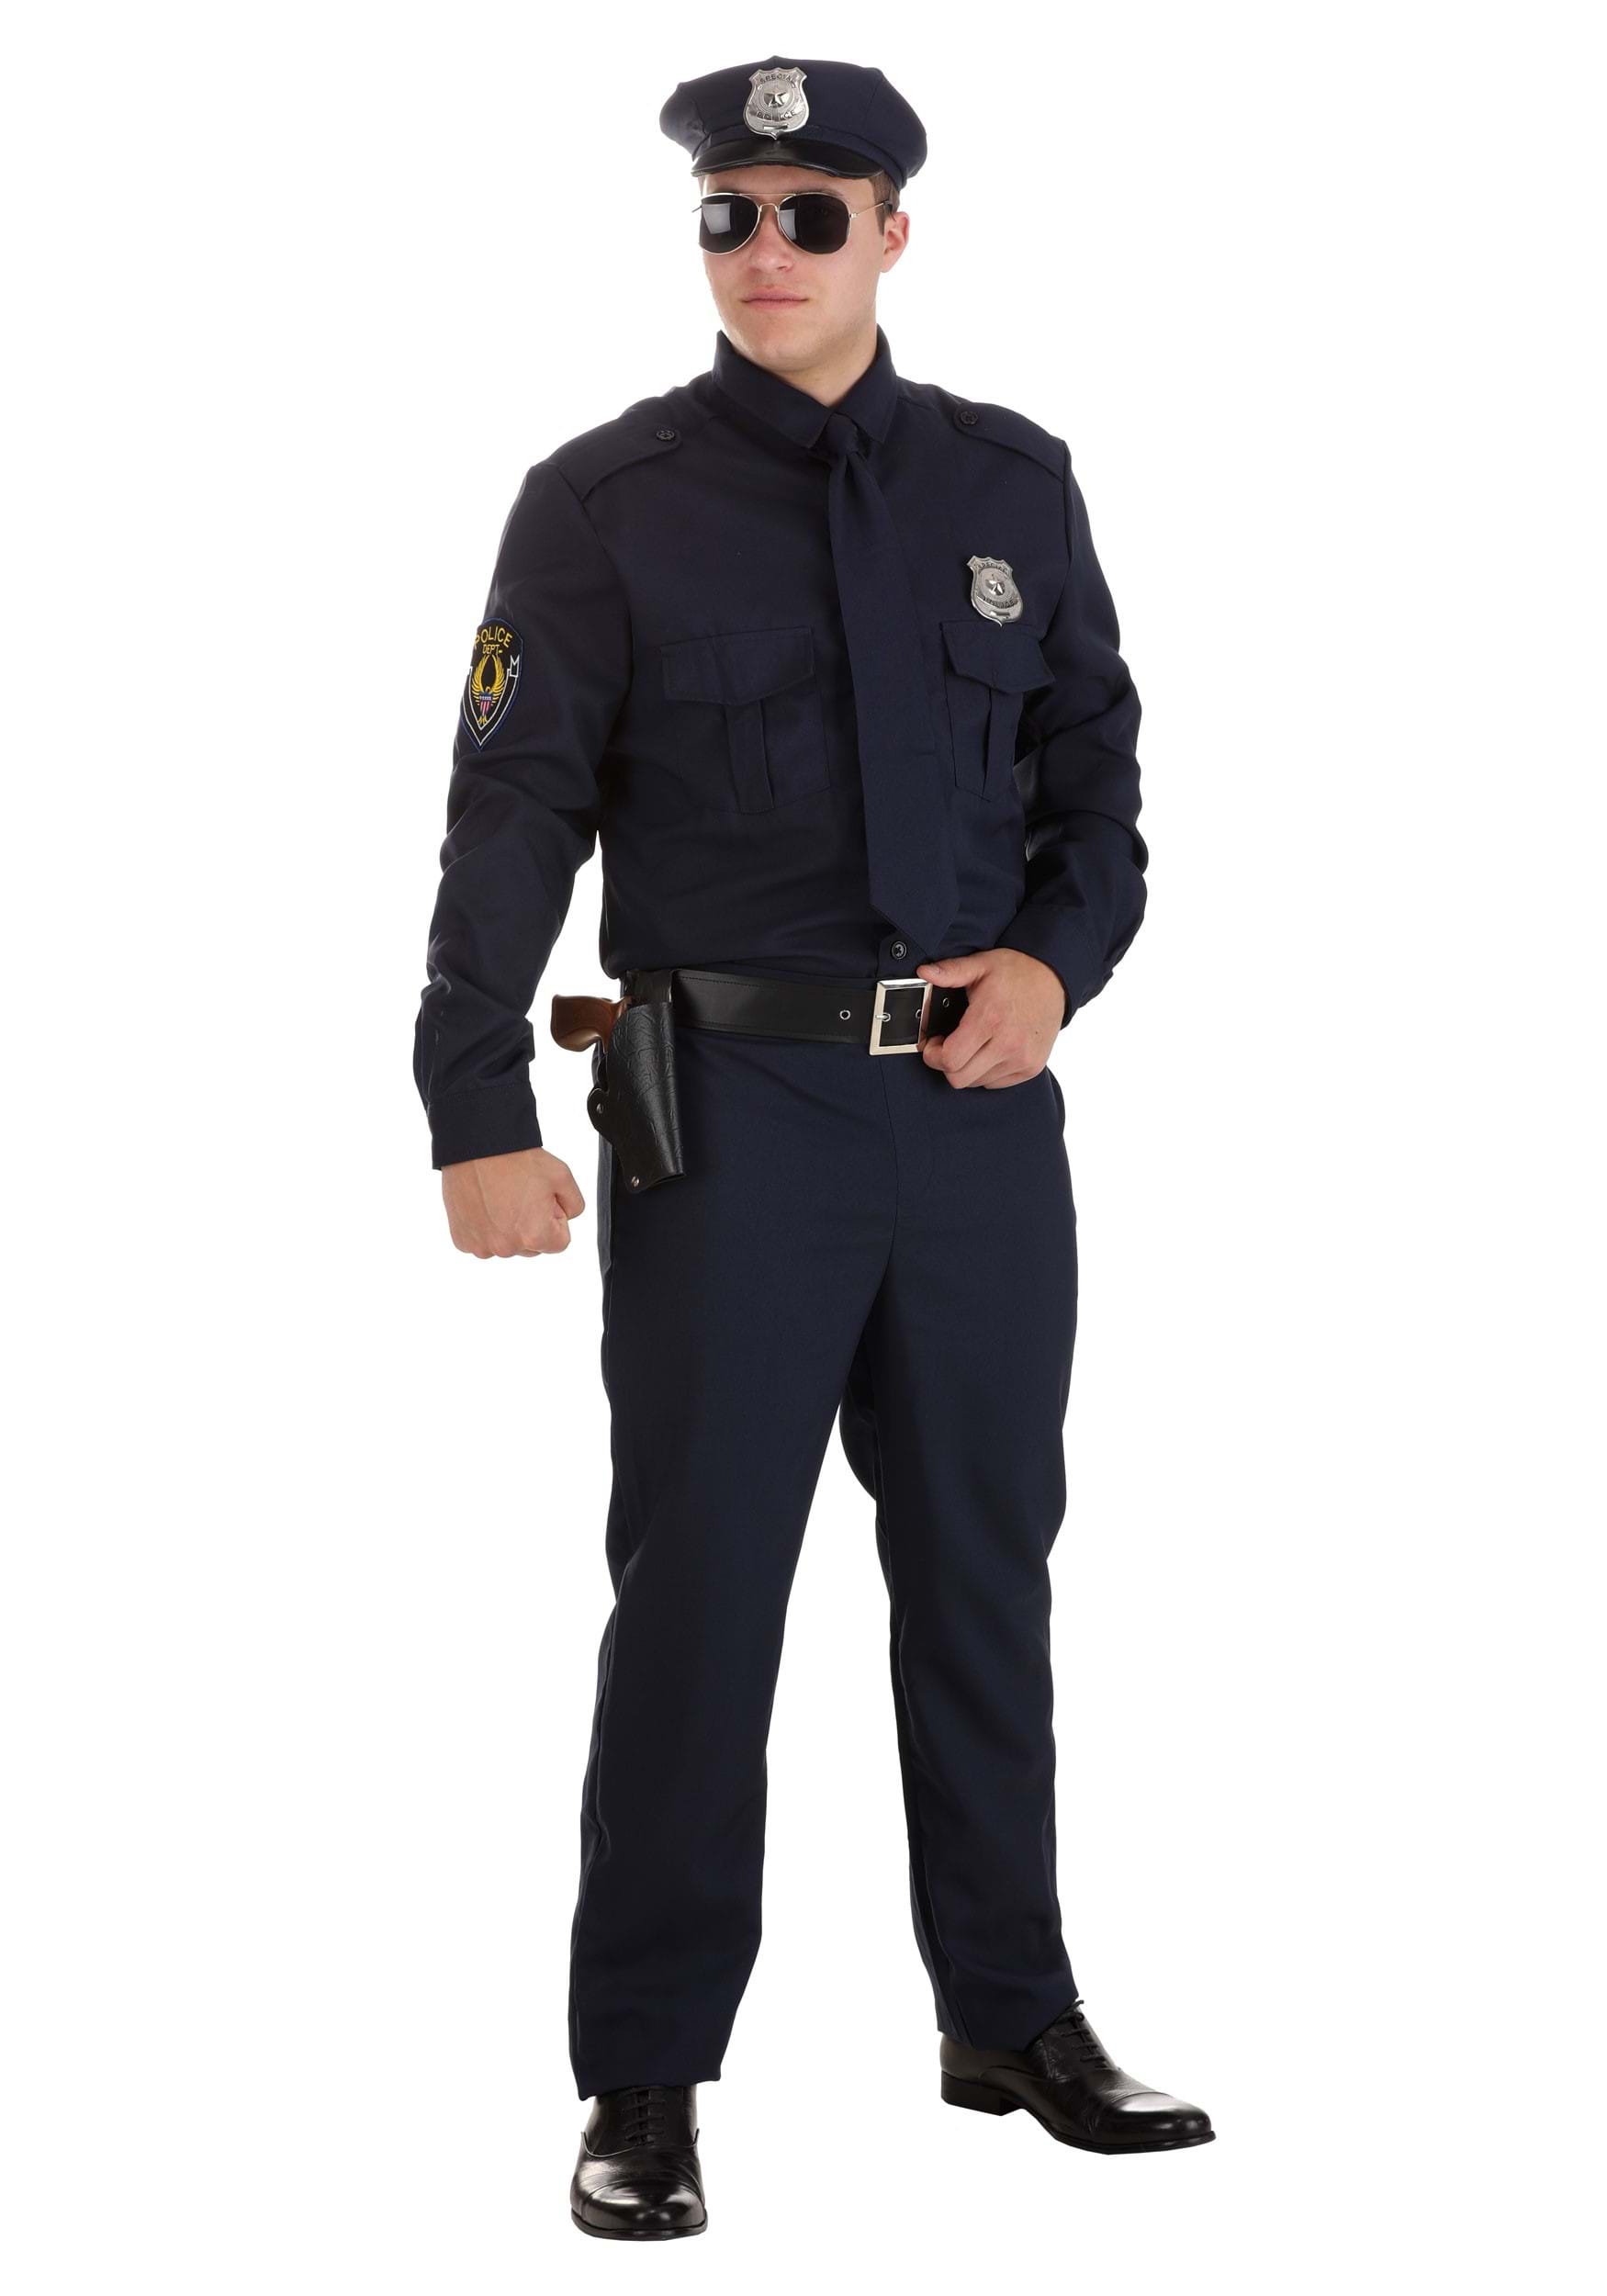 Men's Cop Costume | Men's Law Enforcement Costume